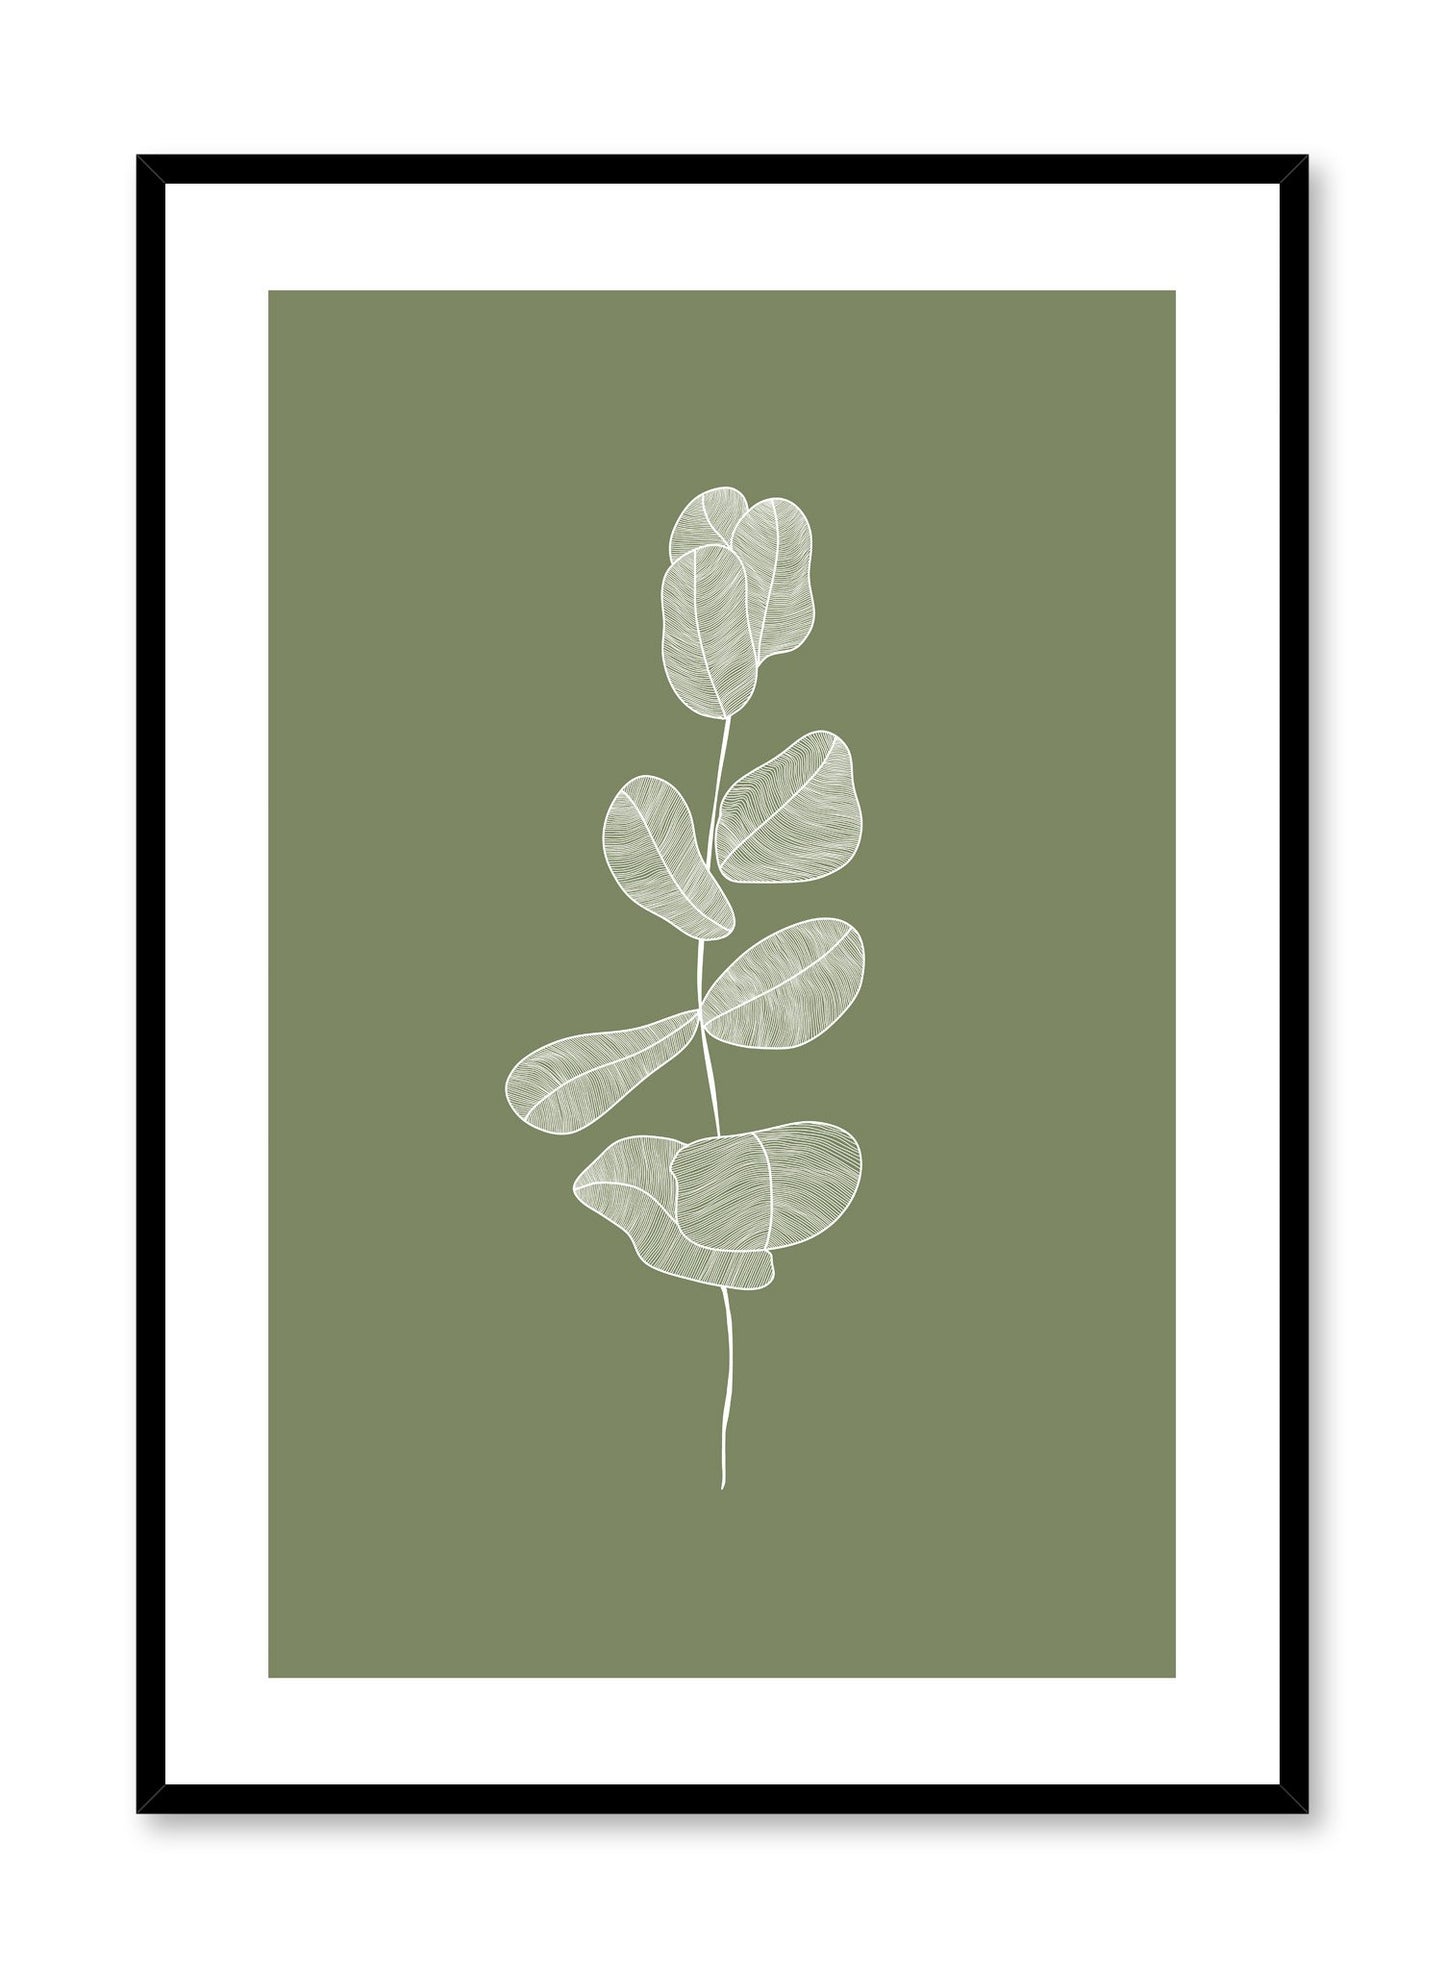 Modern minimalist botanical illustration poster with lined leaves